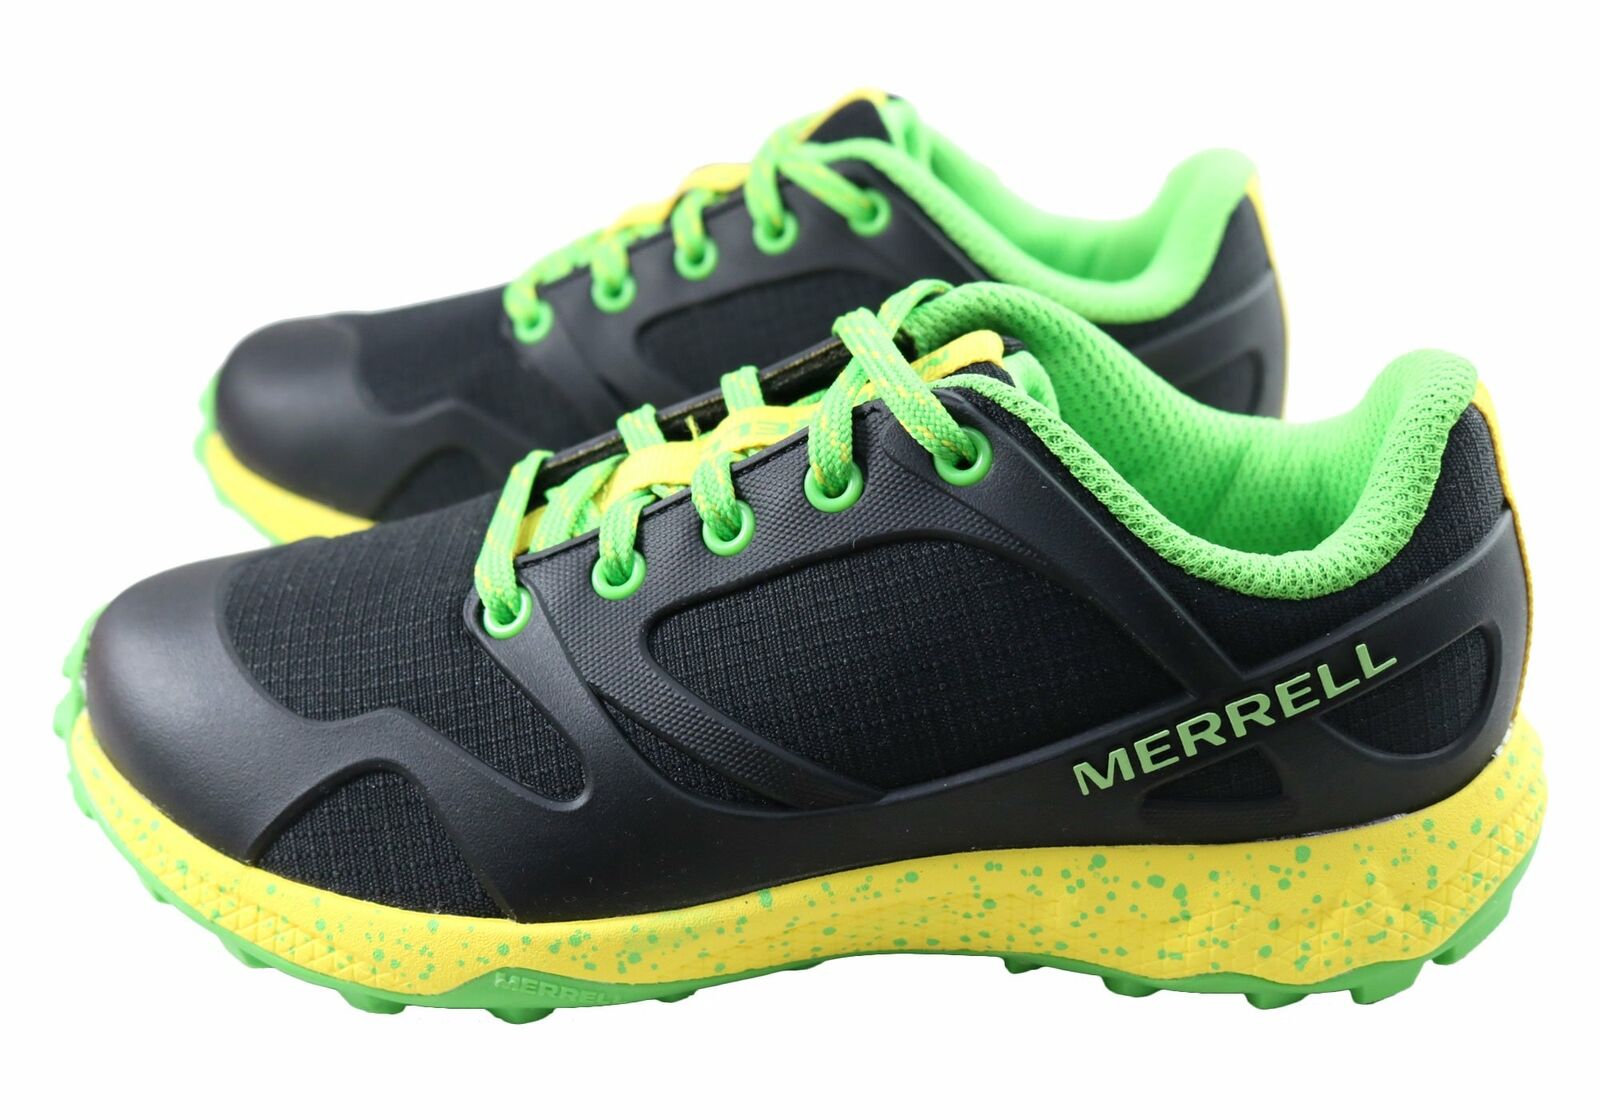 Merrell Junior & Older Kids Altalight Comfortable Lace Up Shoes